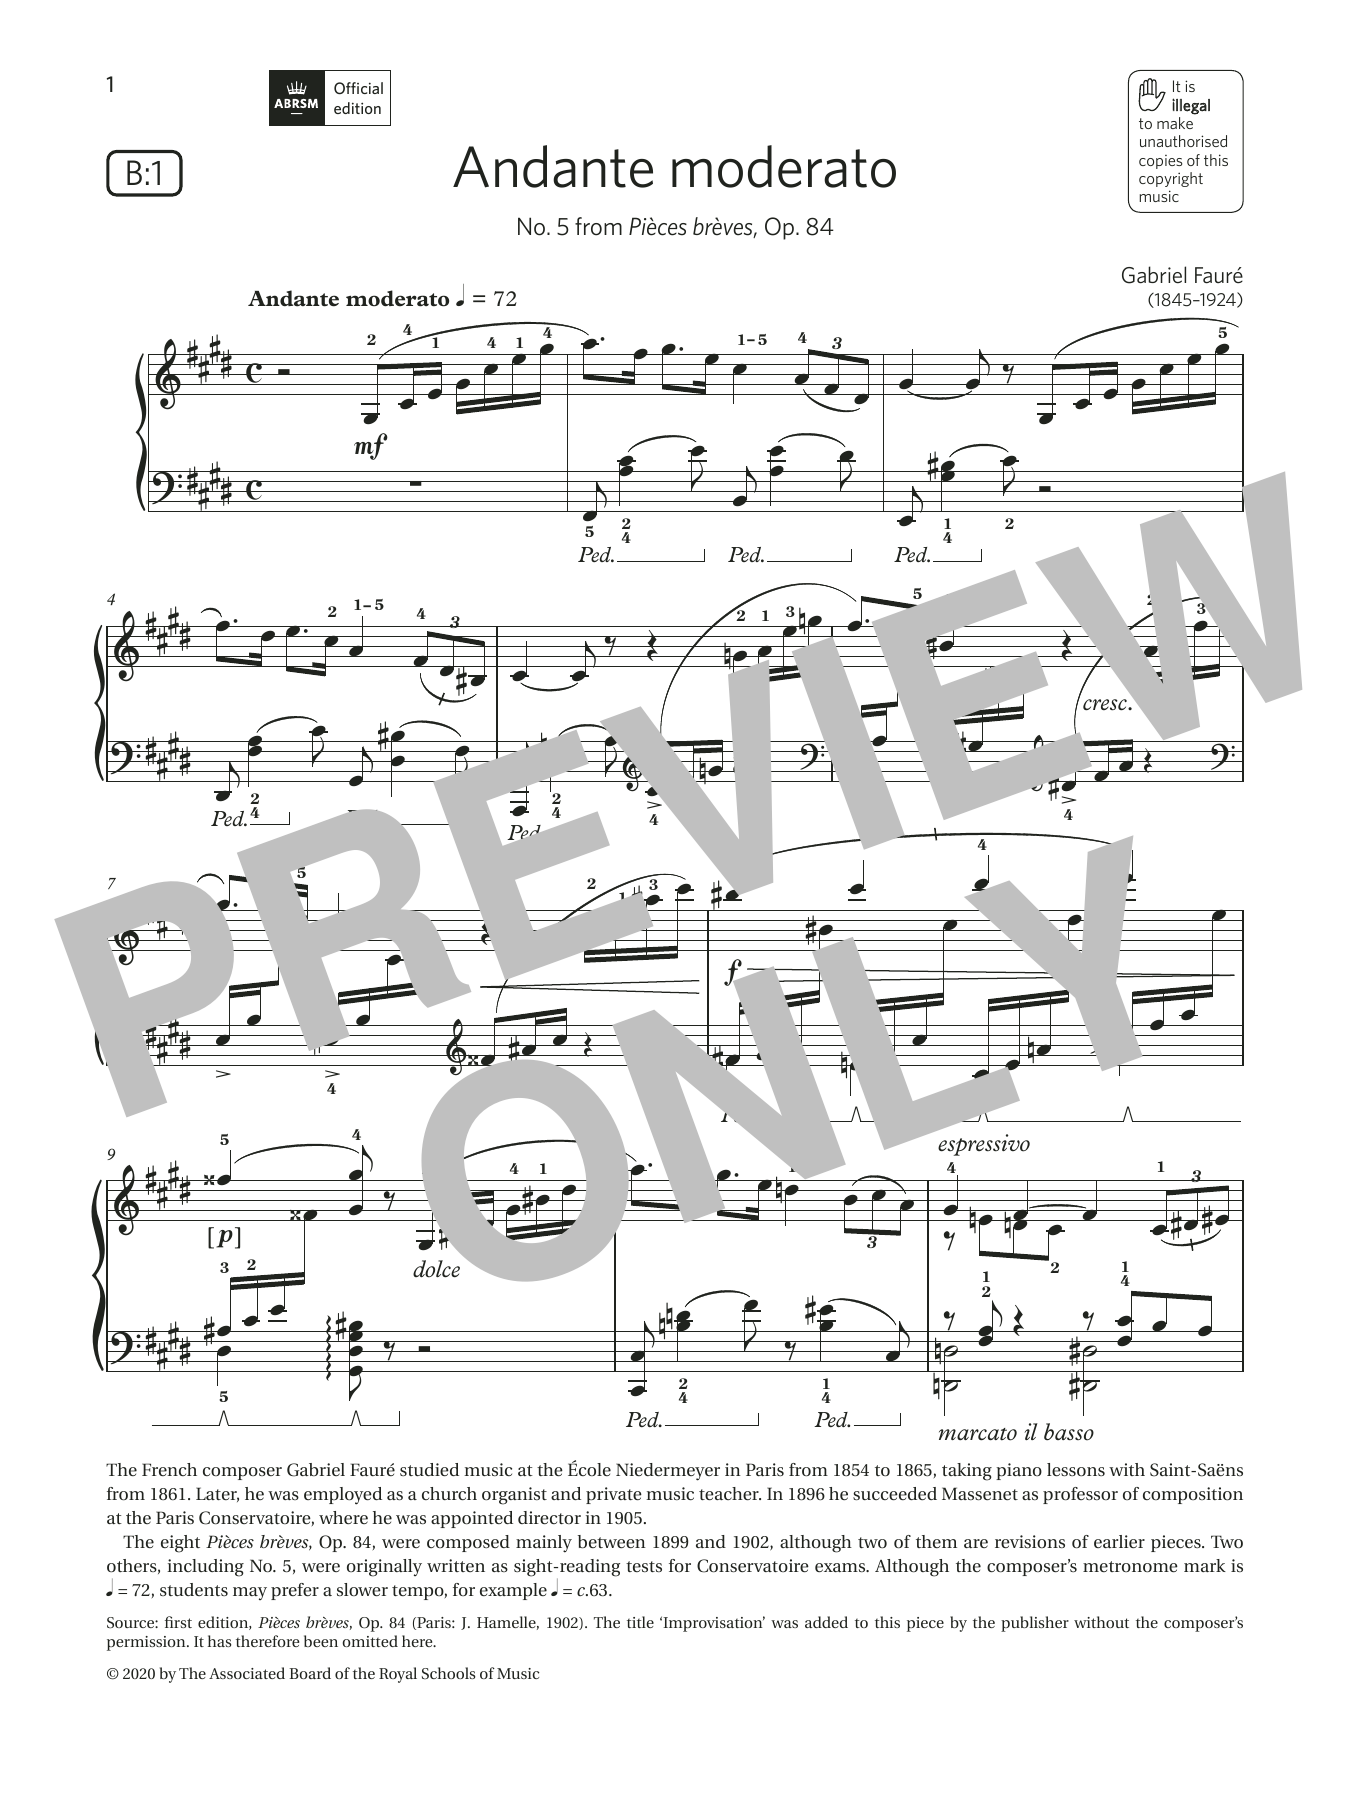 Download Gabriel Faure Andante moderato (Grade 7, list B1, fro Sheet Music